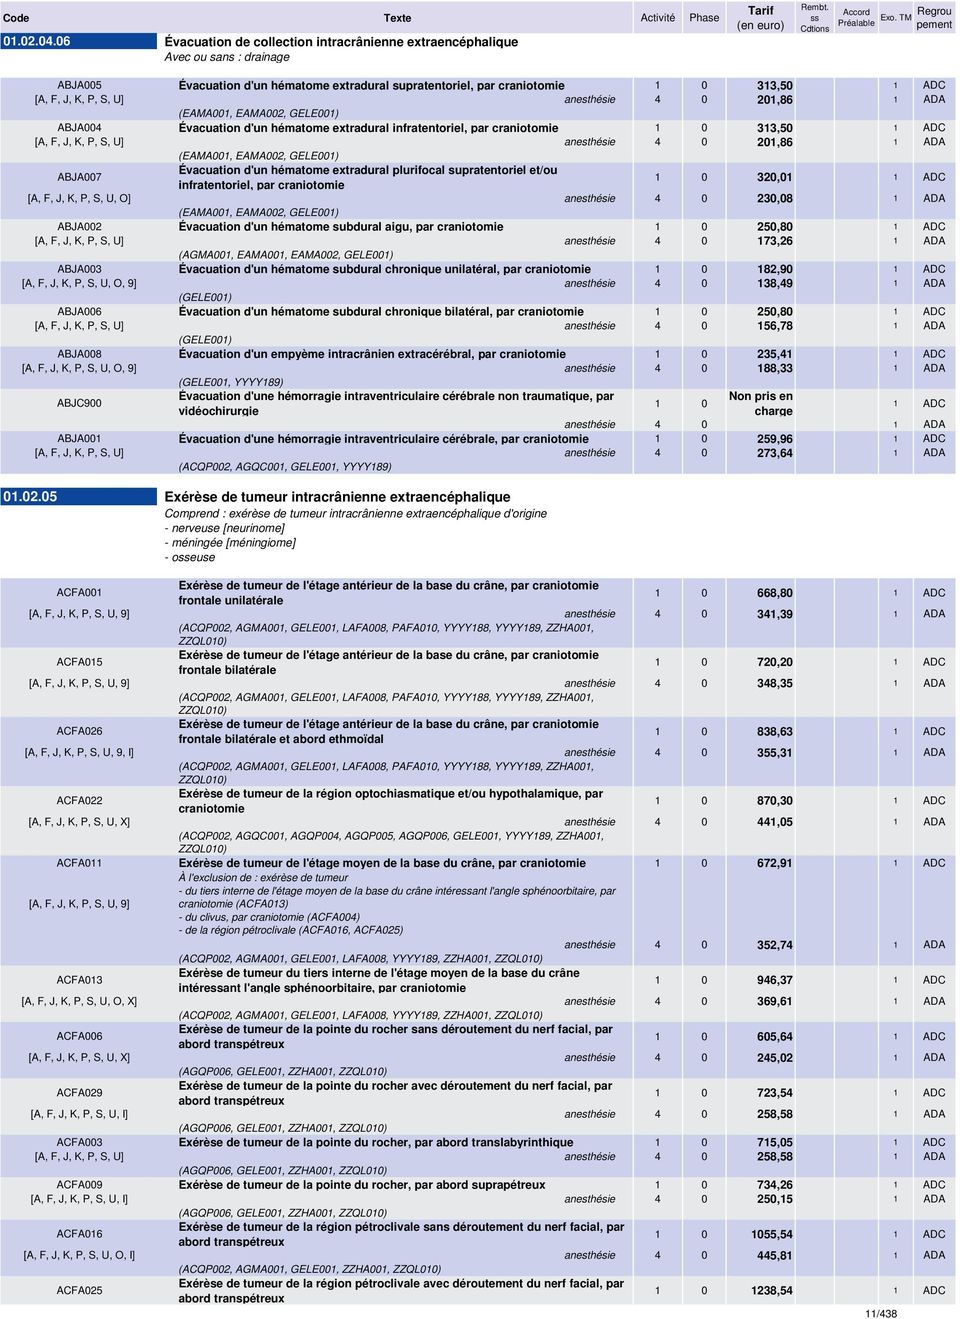 anesthésie 4 0 201,86 1 ADA (EAMA001, EAMA002, GELE001) ABJA004 Évacuation d'un hématome extradural infratentoriel, par craniotomie 1 0 313,50 1 ADC [A, F, J, K, P, S, U] anesthésie 4 0 201,86 1 ADA